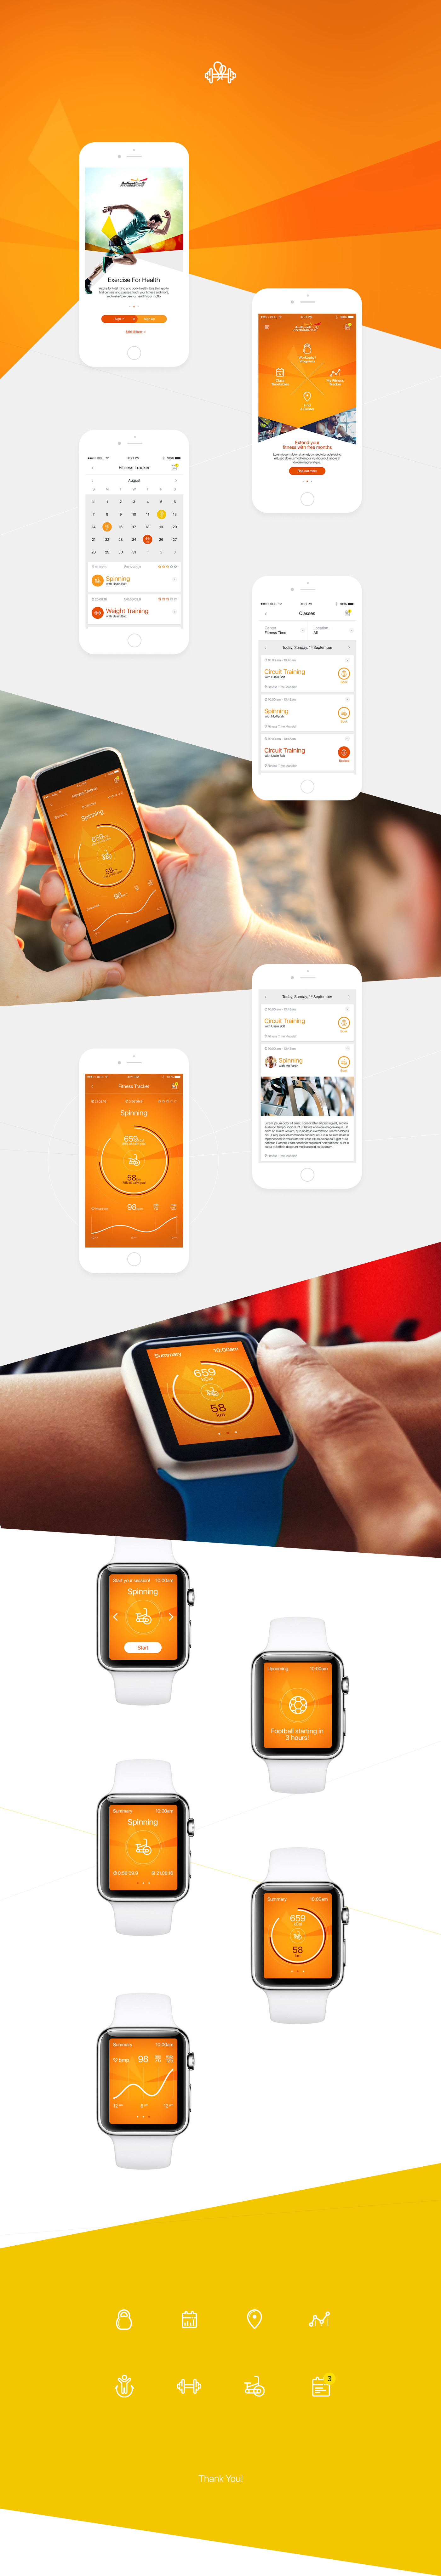 sports app workout gym tracker phone watch orange Interface